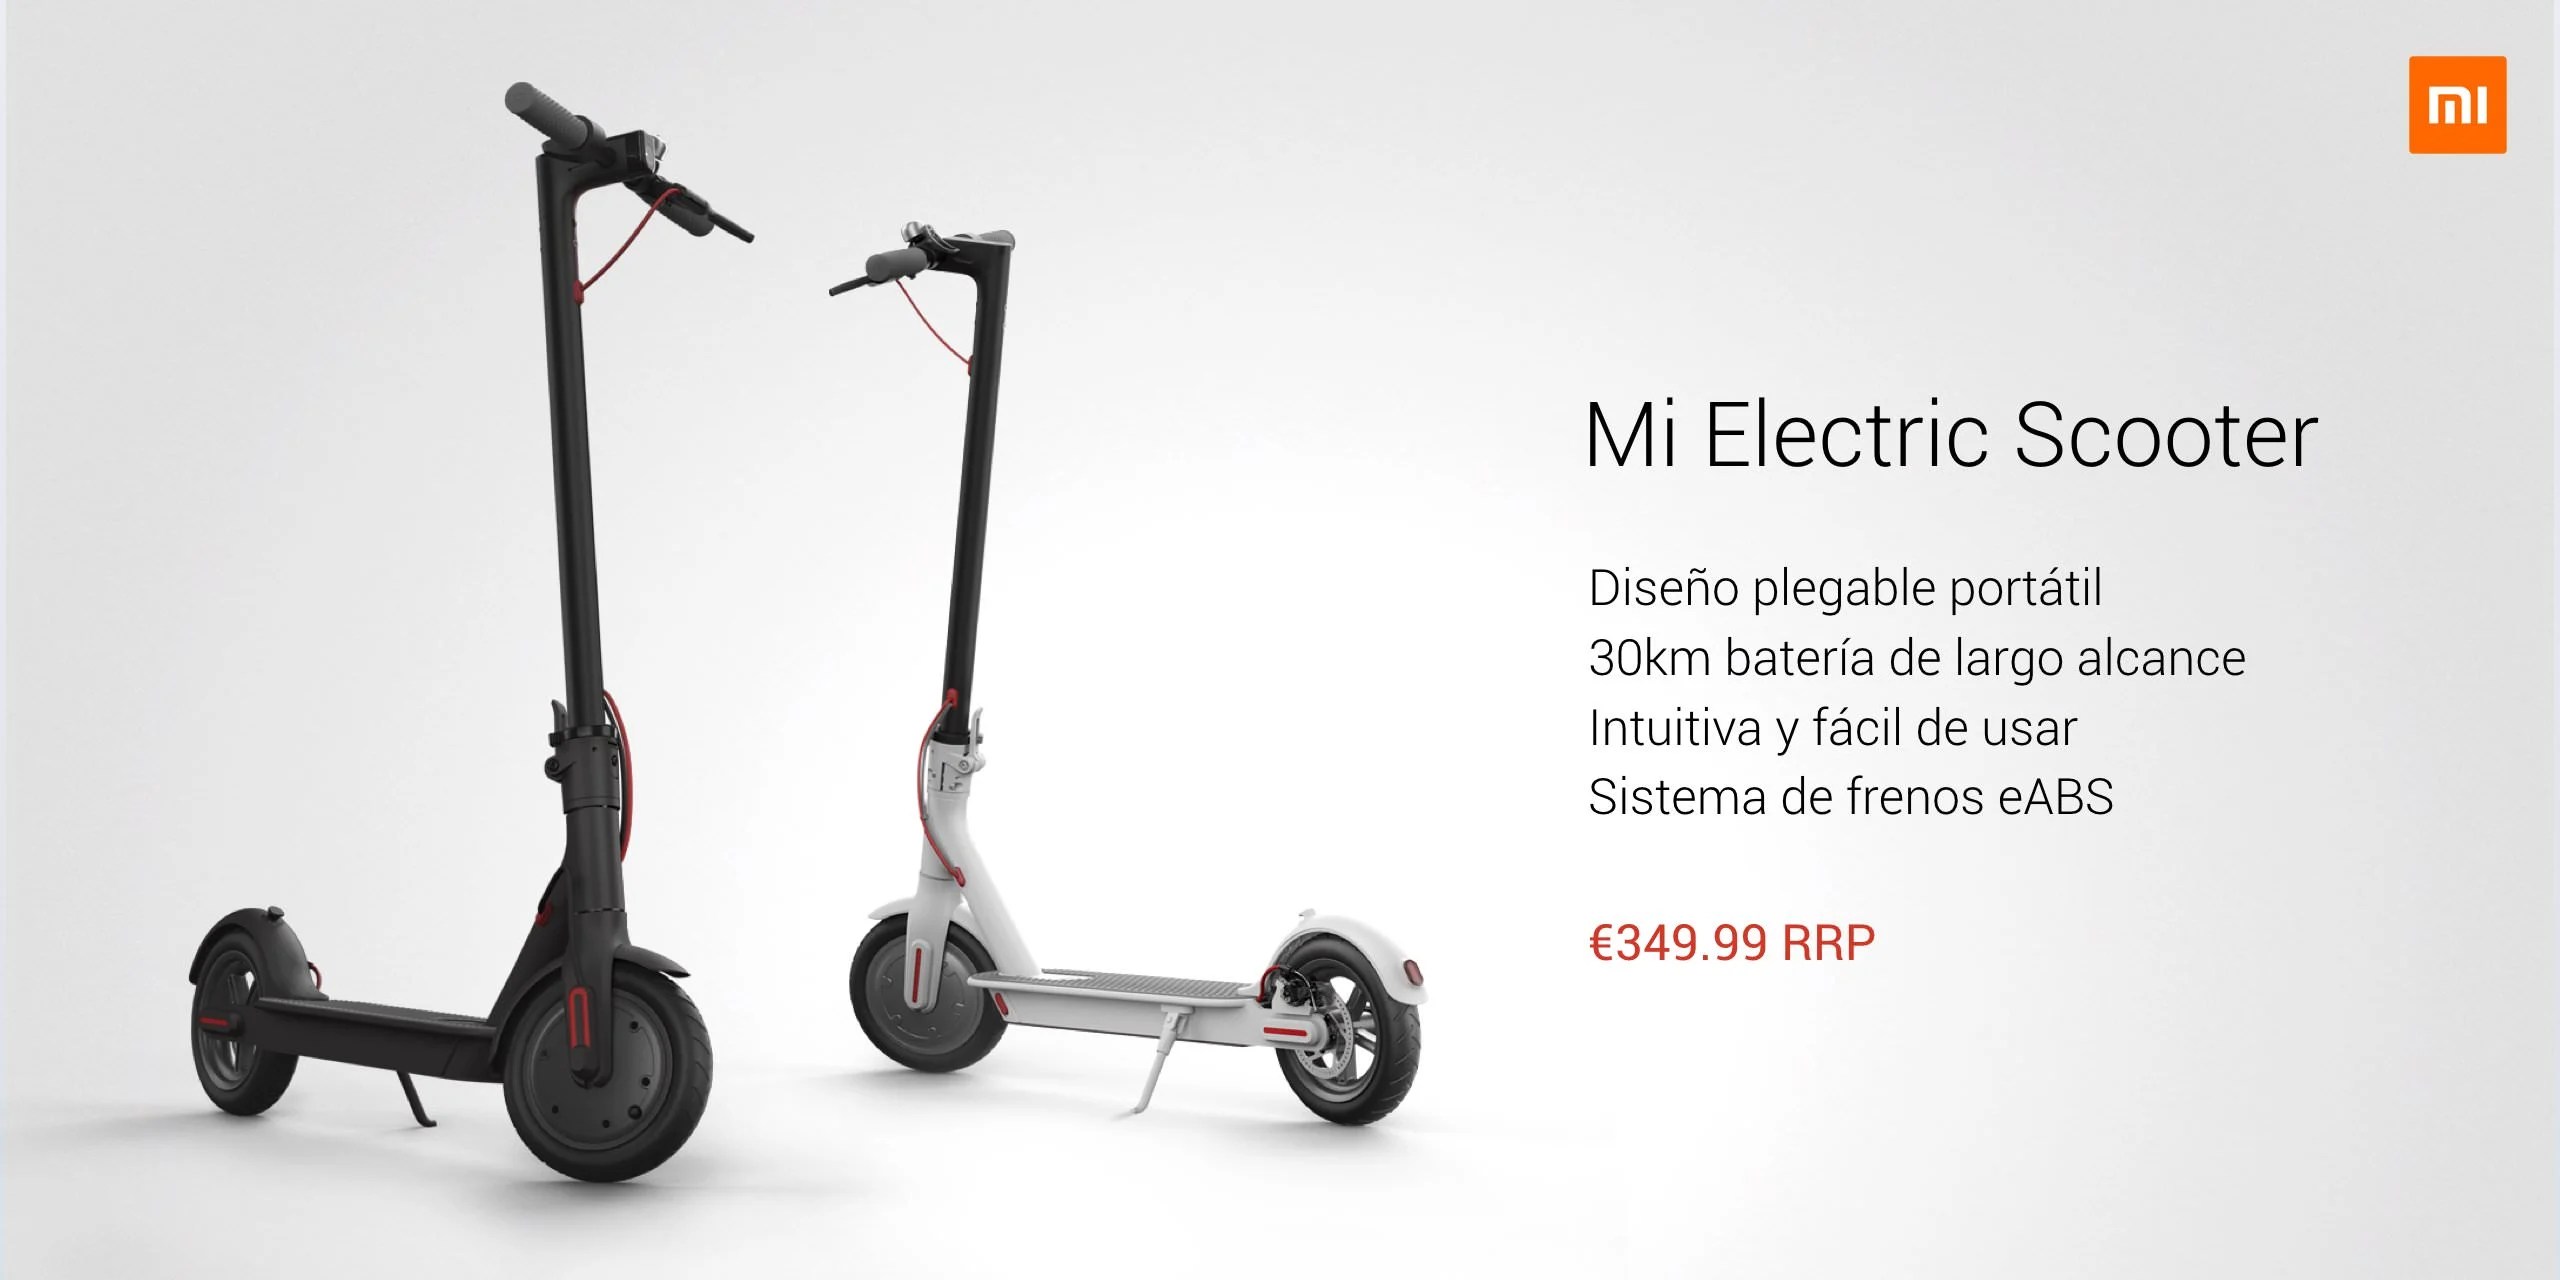 xiaomi-mi-electric-scooter-vente-espagne